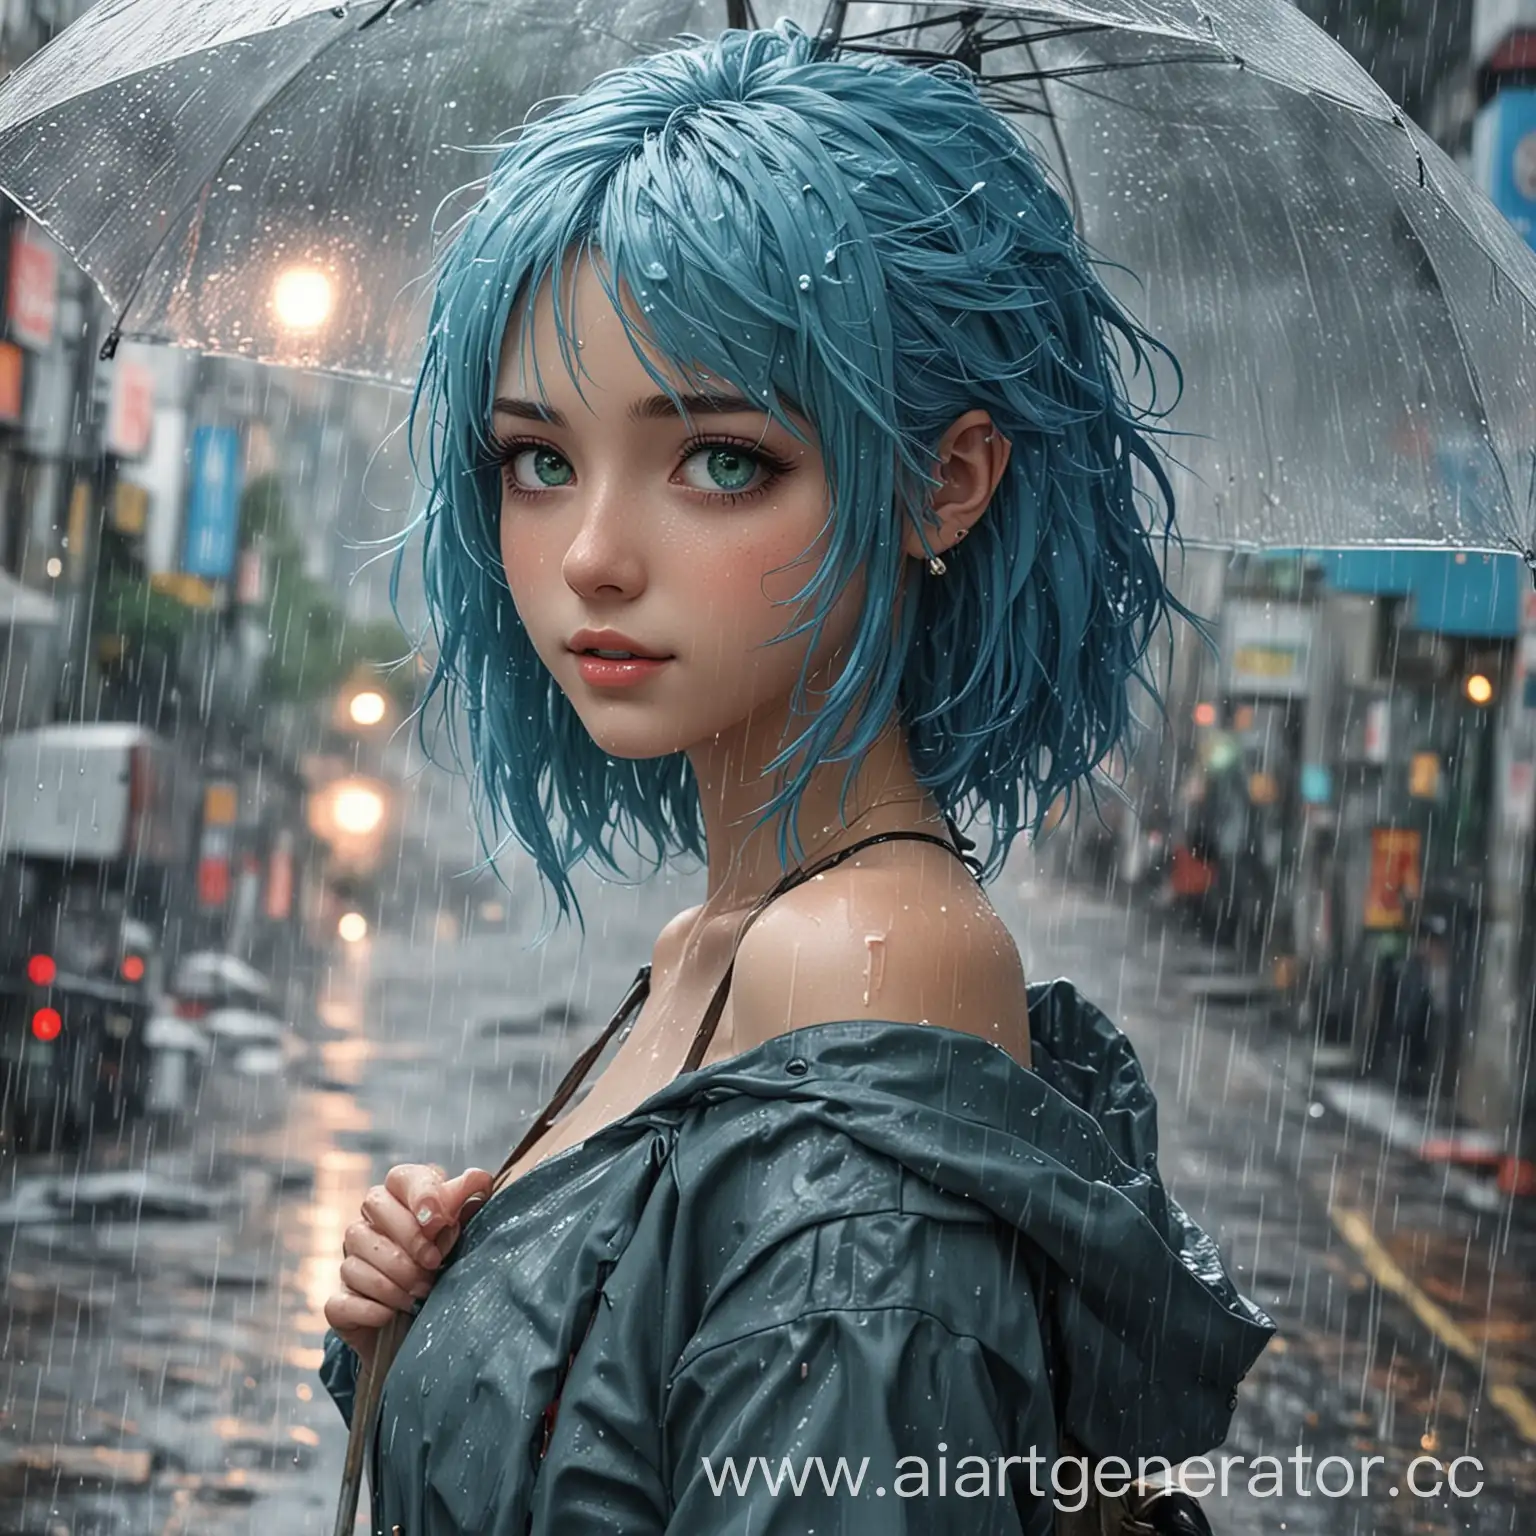 Beautiful-Anime-Girl-with-Blue-Hair-Walking-in-Tokyo-Rain